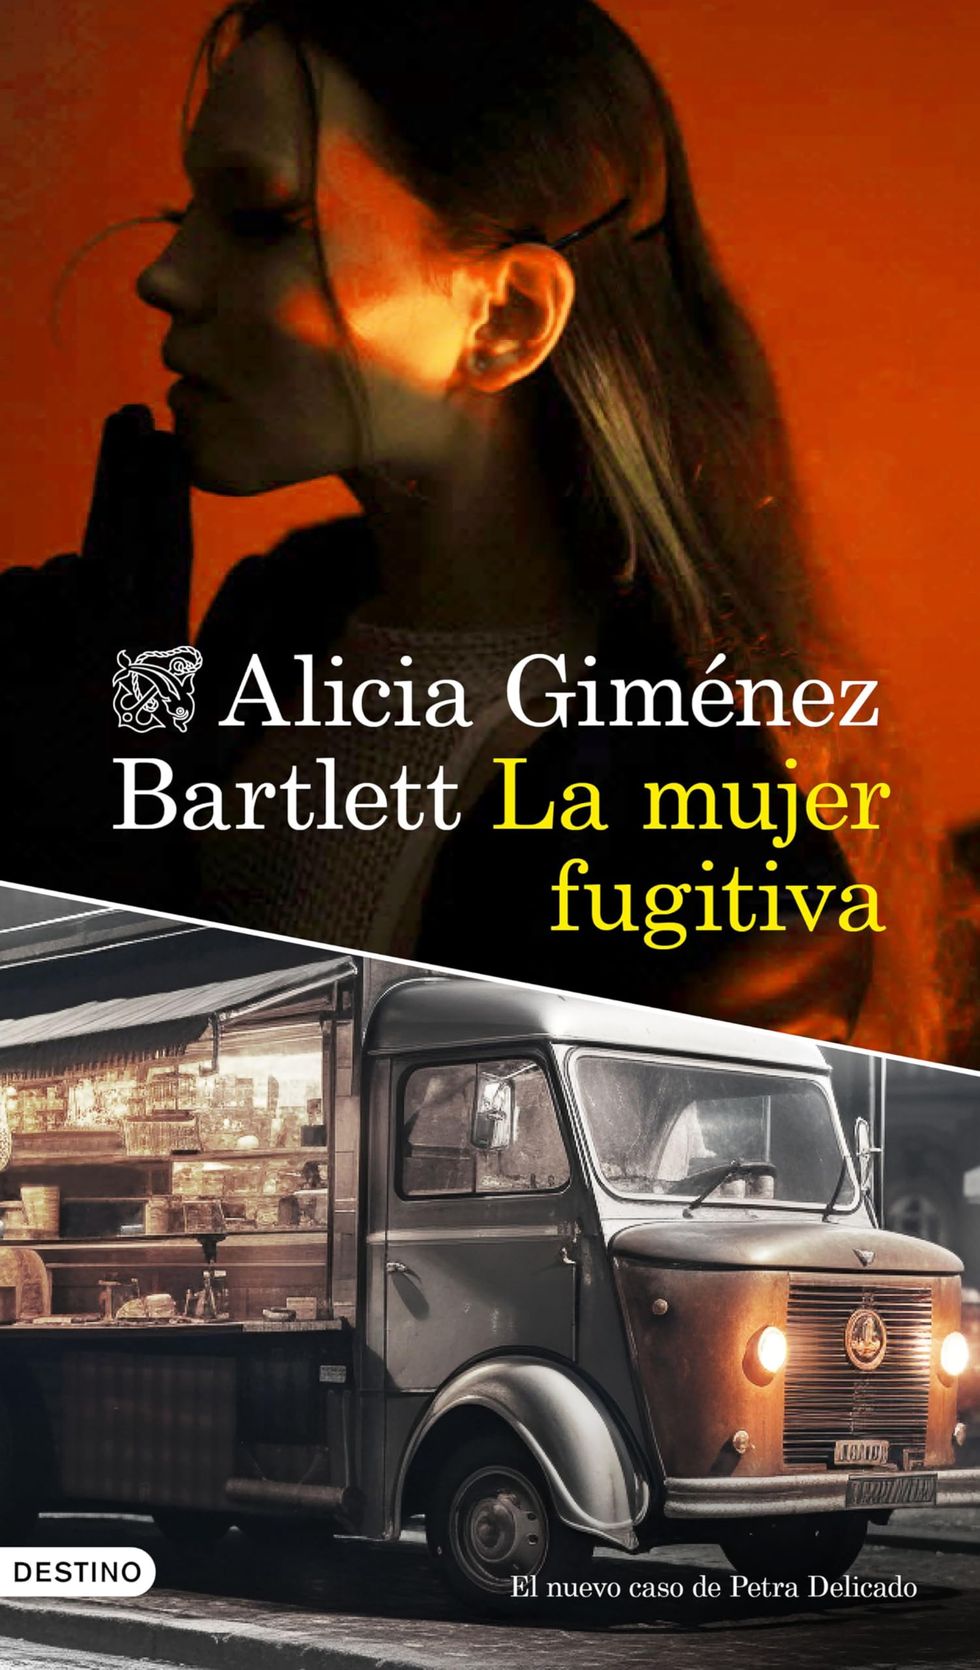 'La mujer fugitiva' de Alicia Giménez Bartlett [17 de enero]